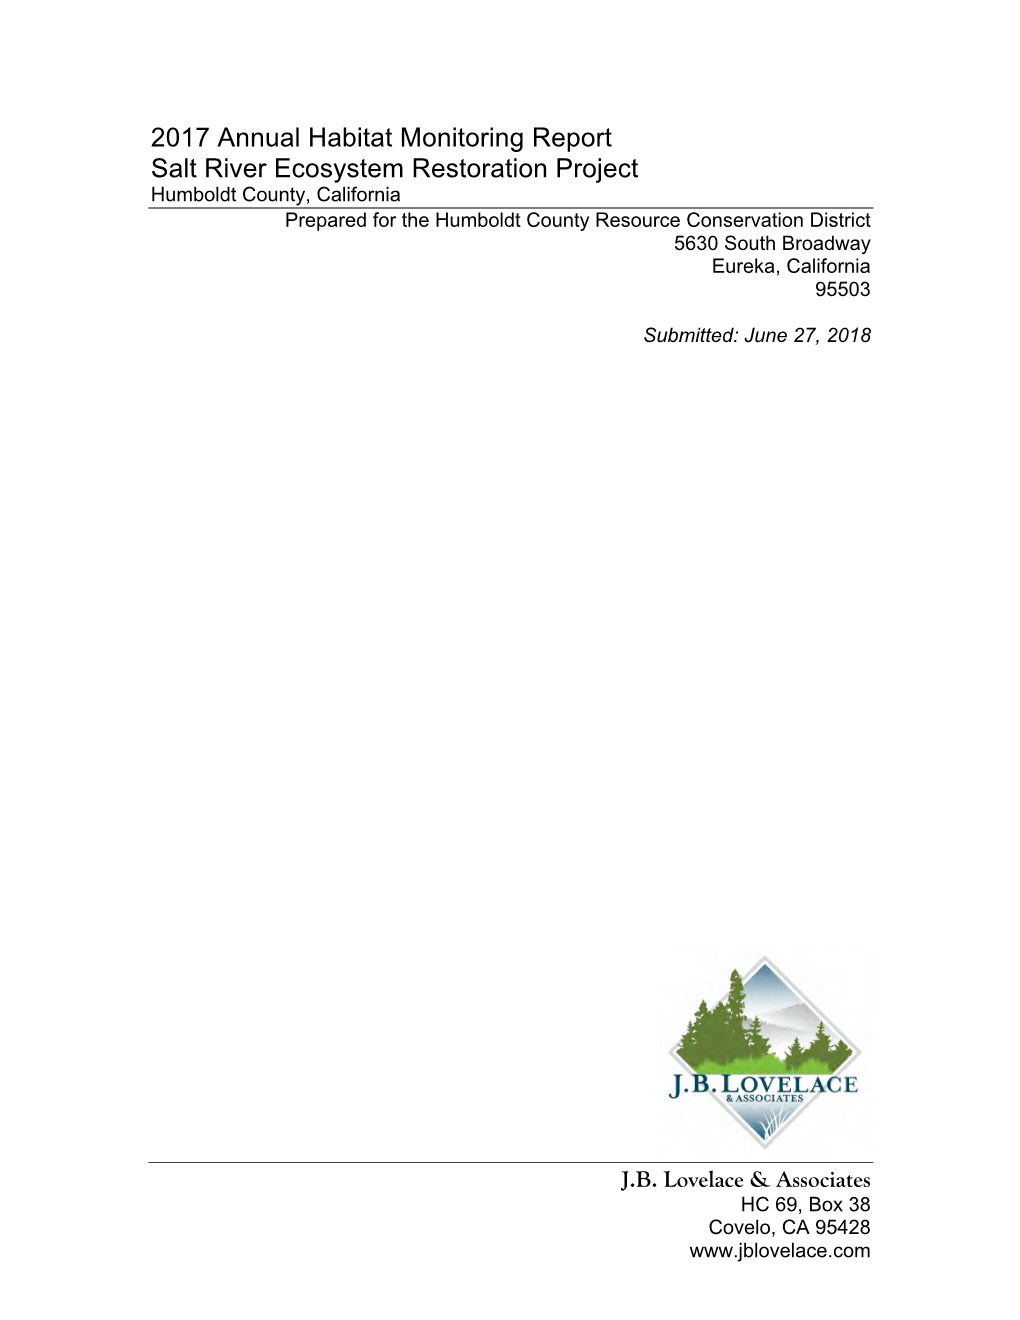 Salt River Vegetation Habitat Monitoring Report 2017